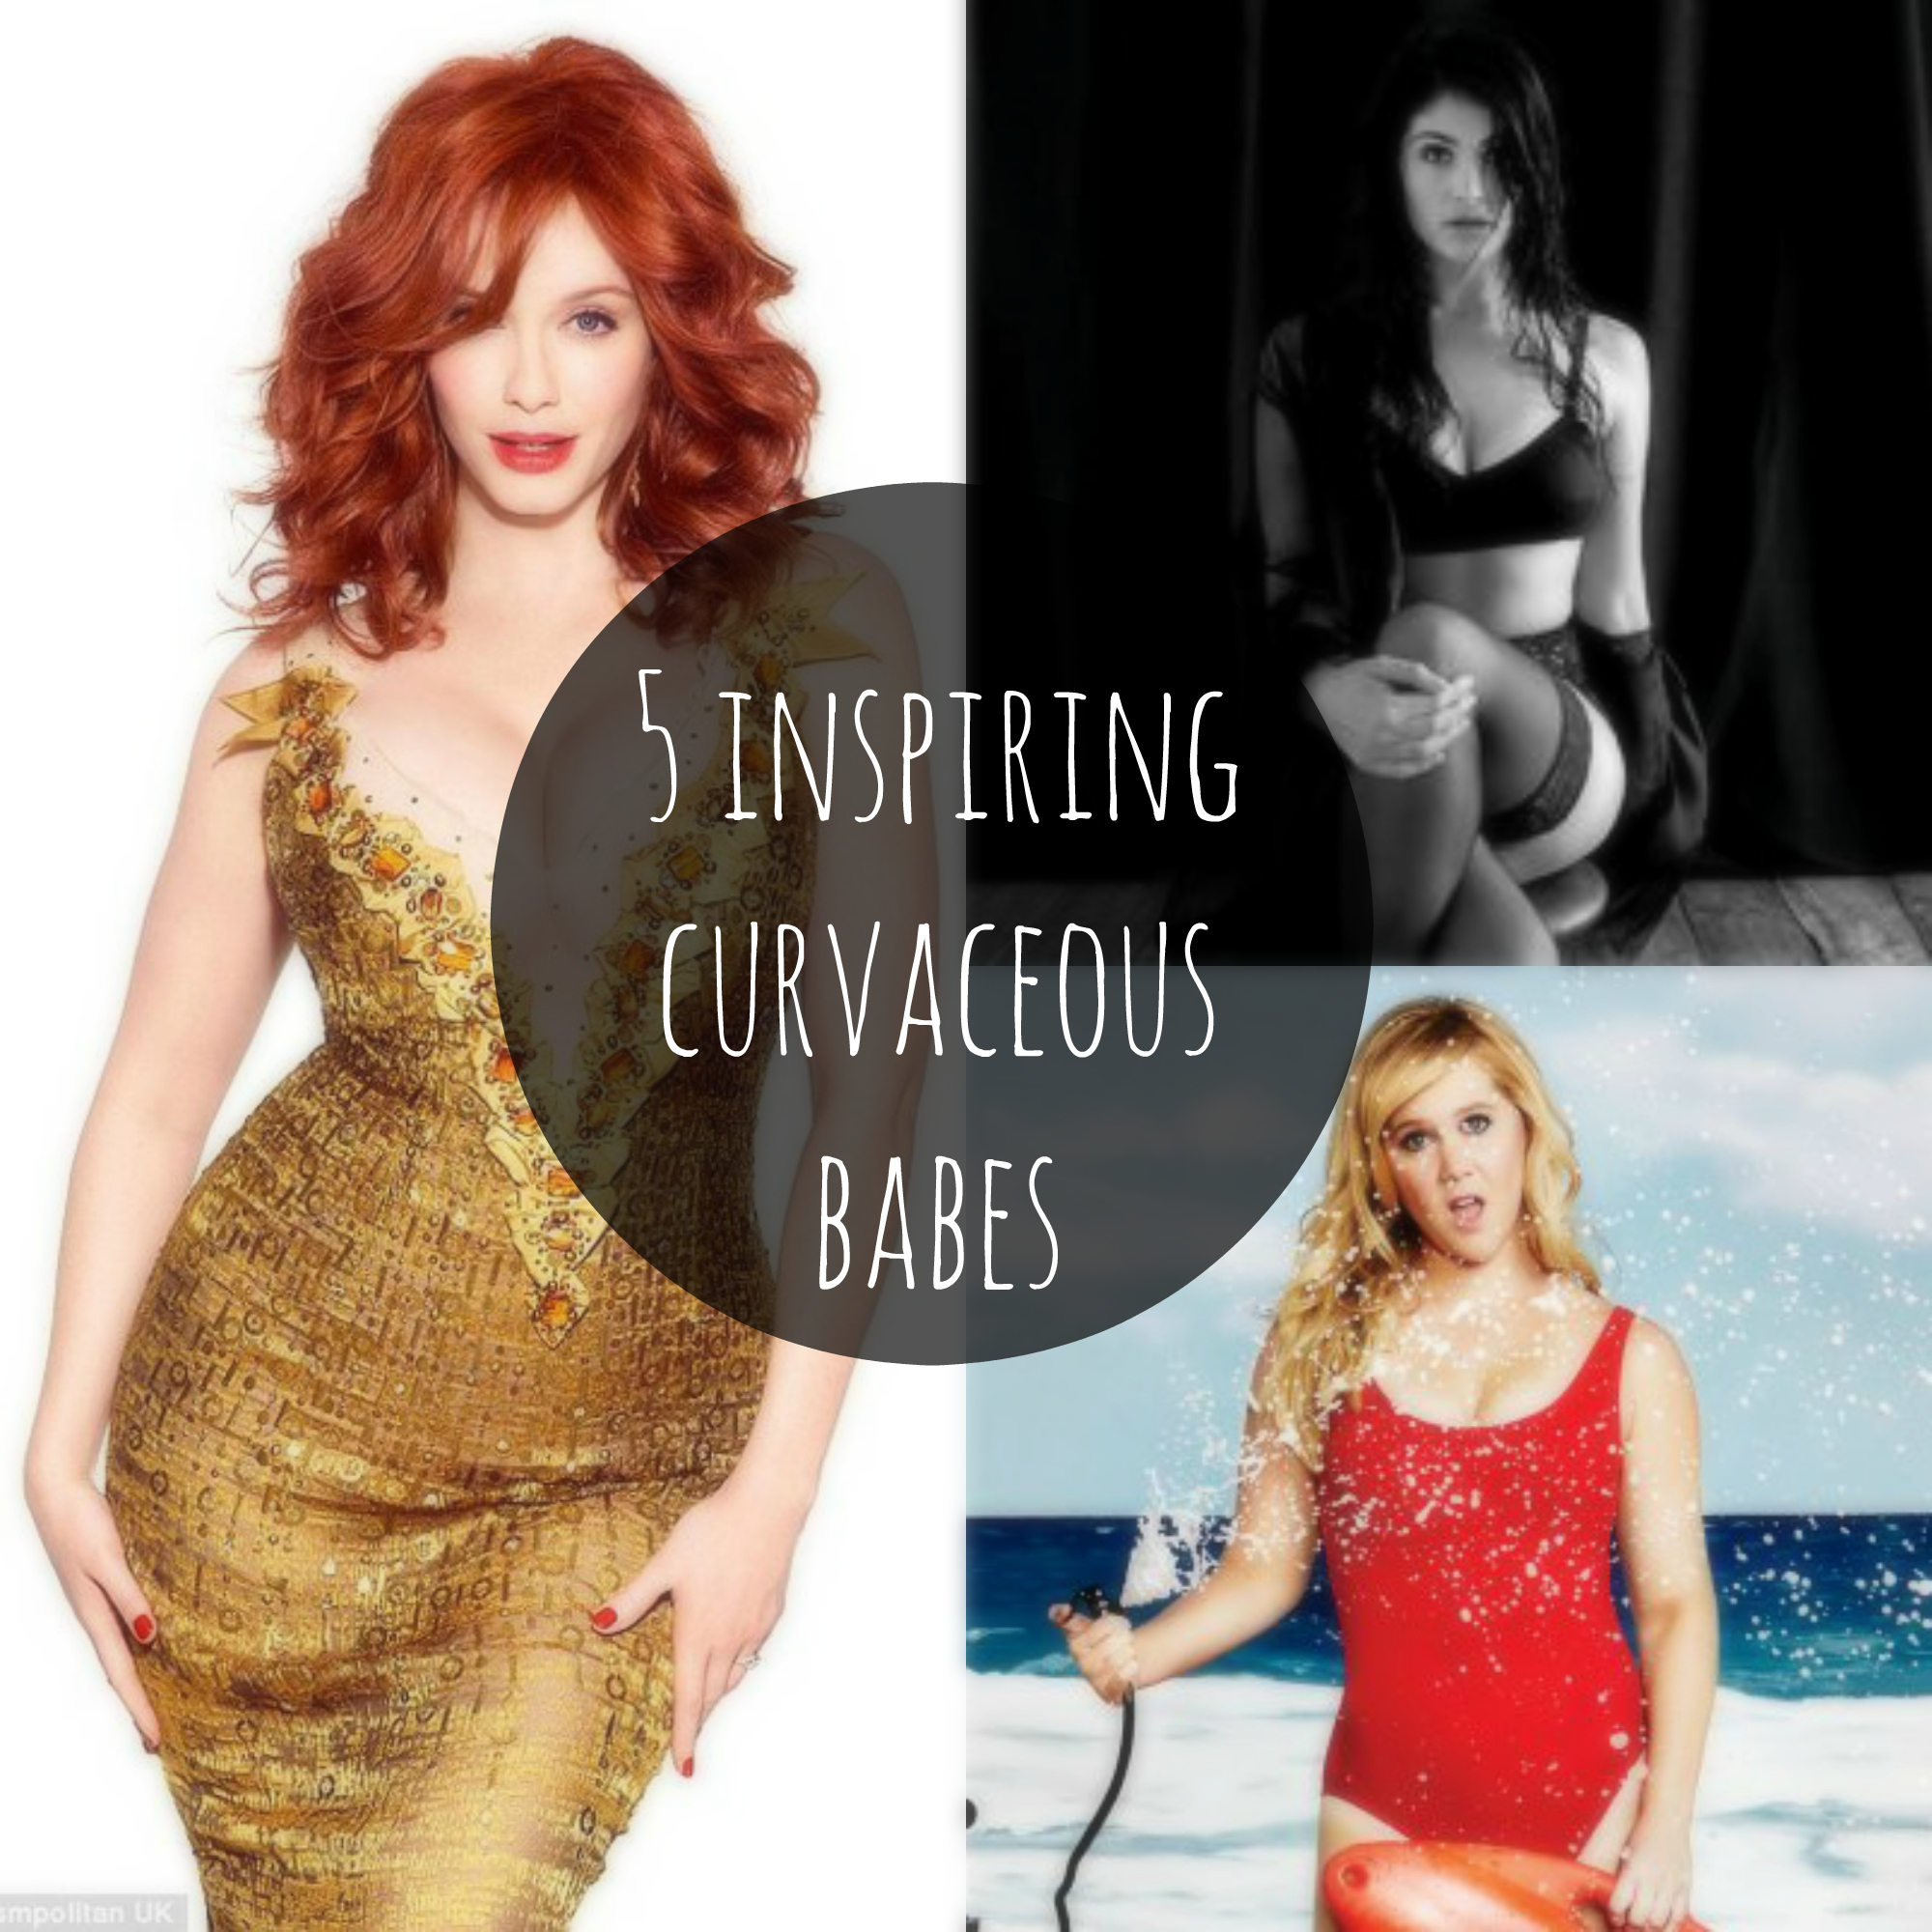 Curvy Women Inspire